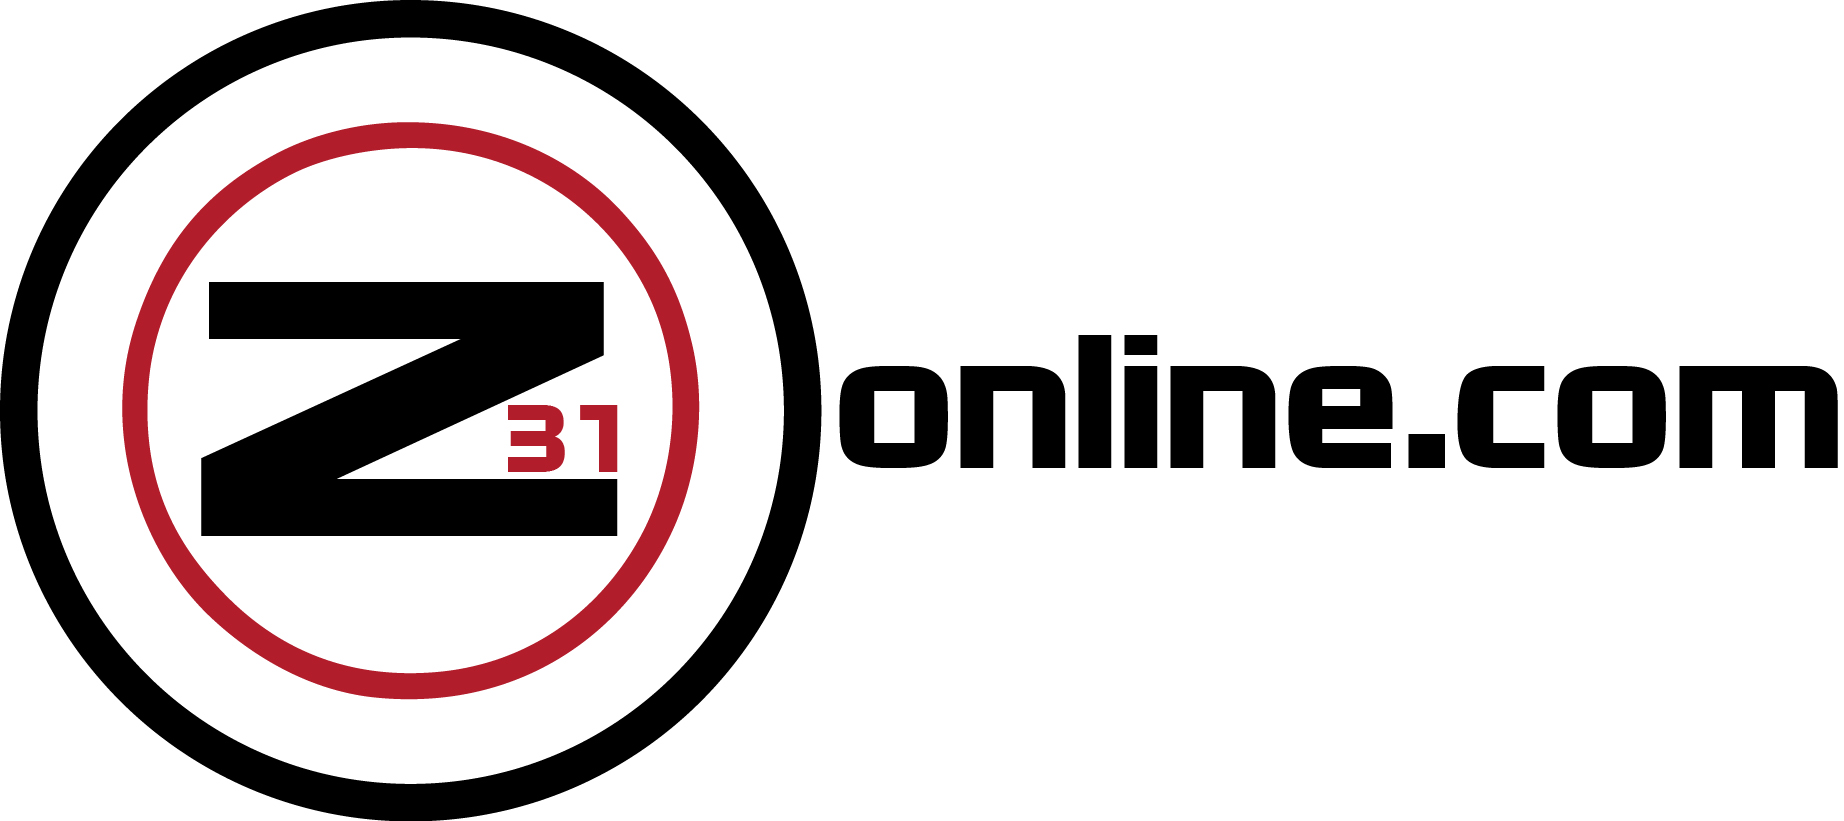 z31online_logo